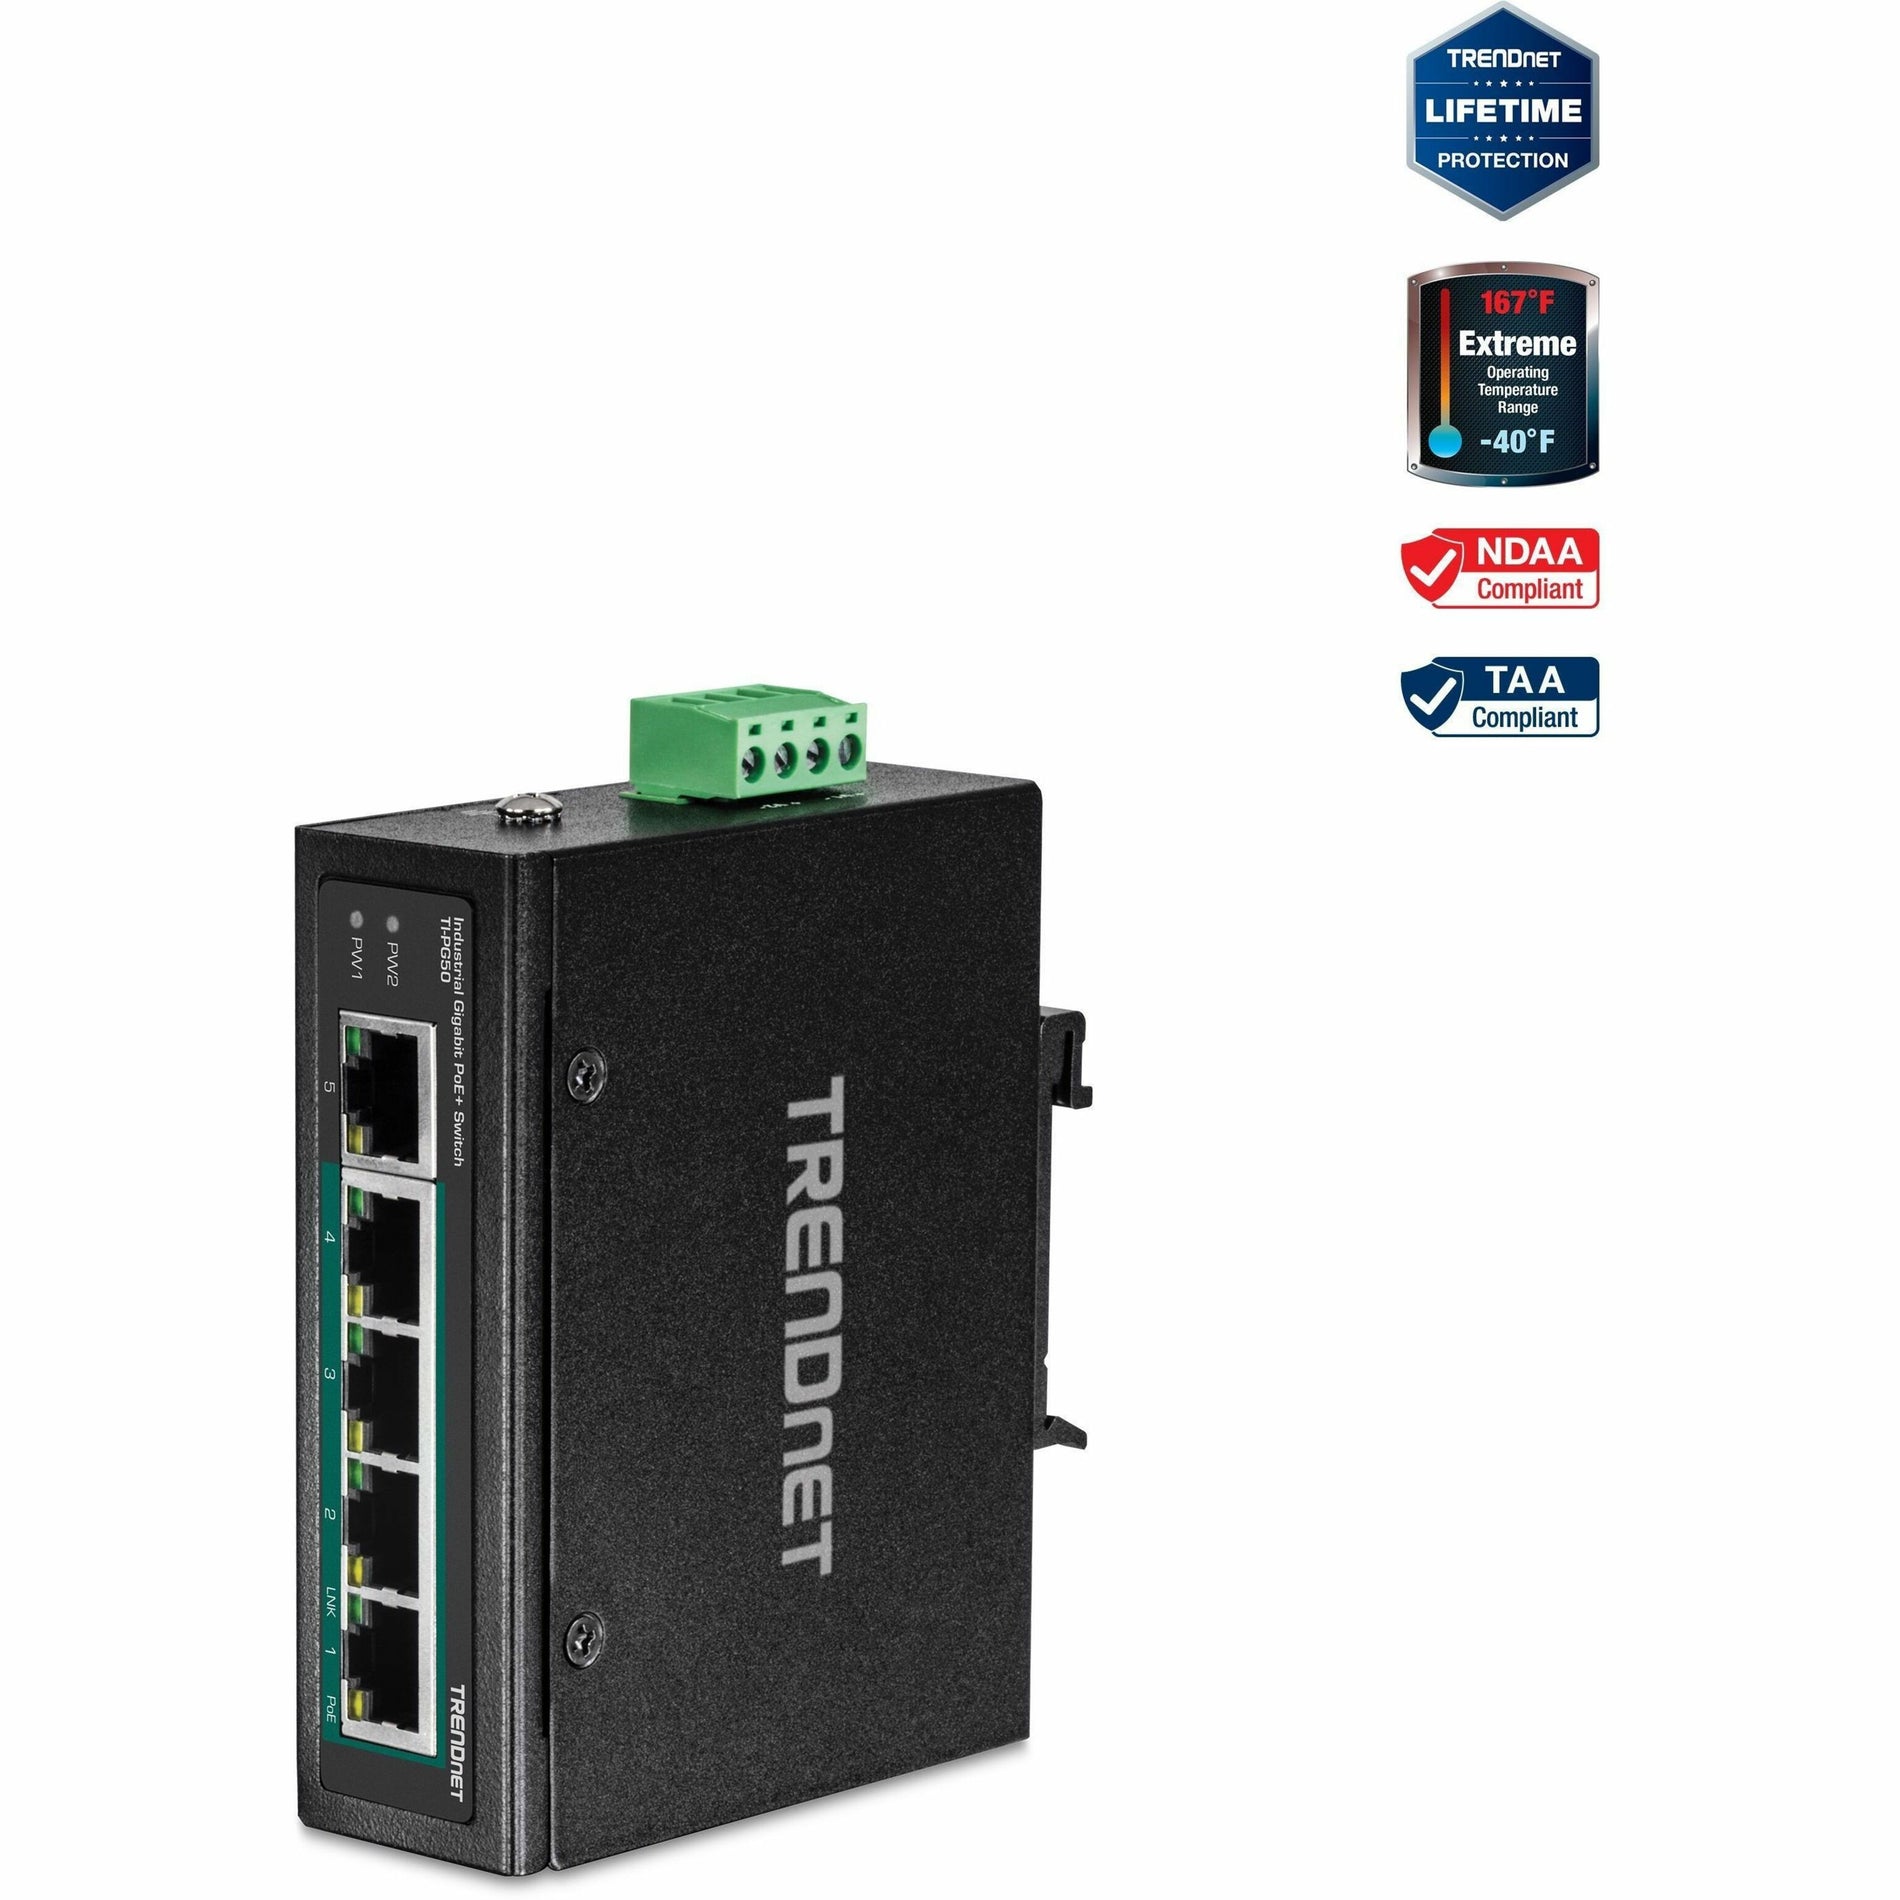 TRENDnet TI-PG50 5-Port Industrial Gigabit PoE + DIN-Rail Switch, Gigabit Ethernet Network Switch